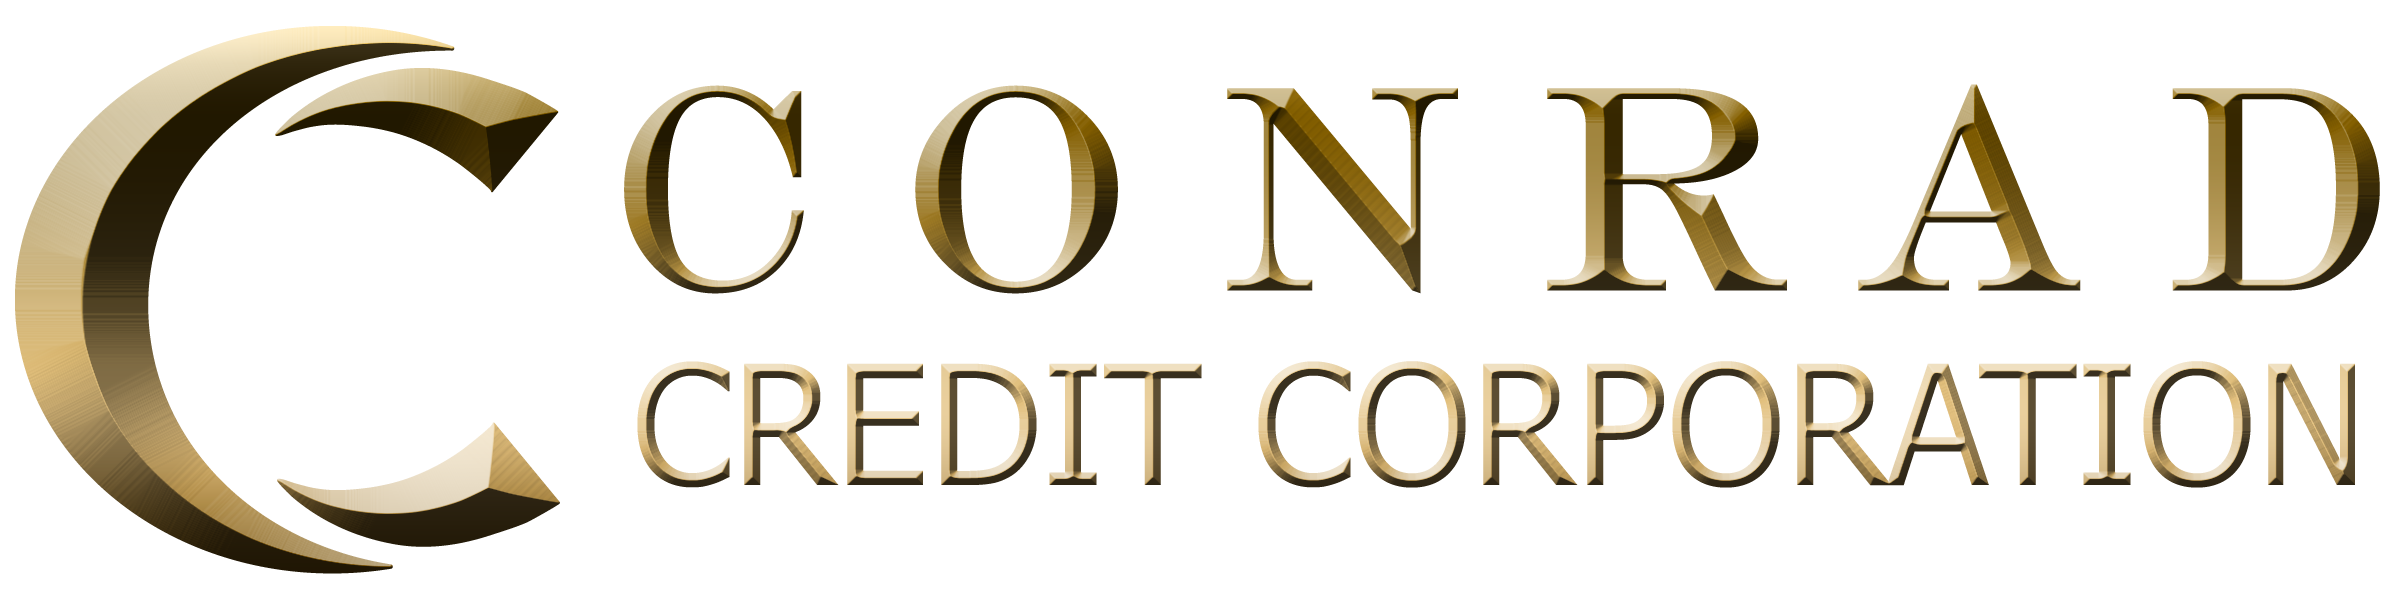 Gold Conrad Credit Corporation Logo